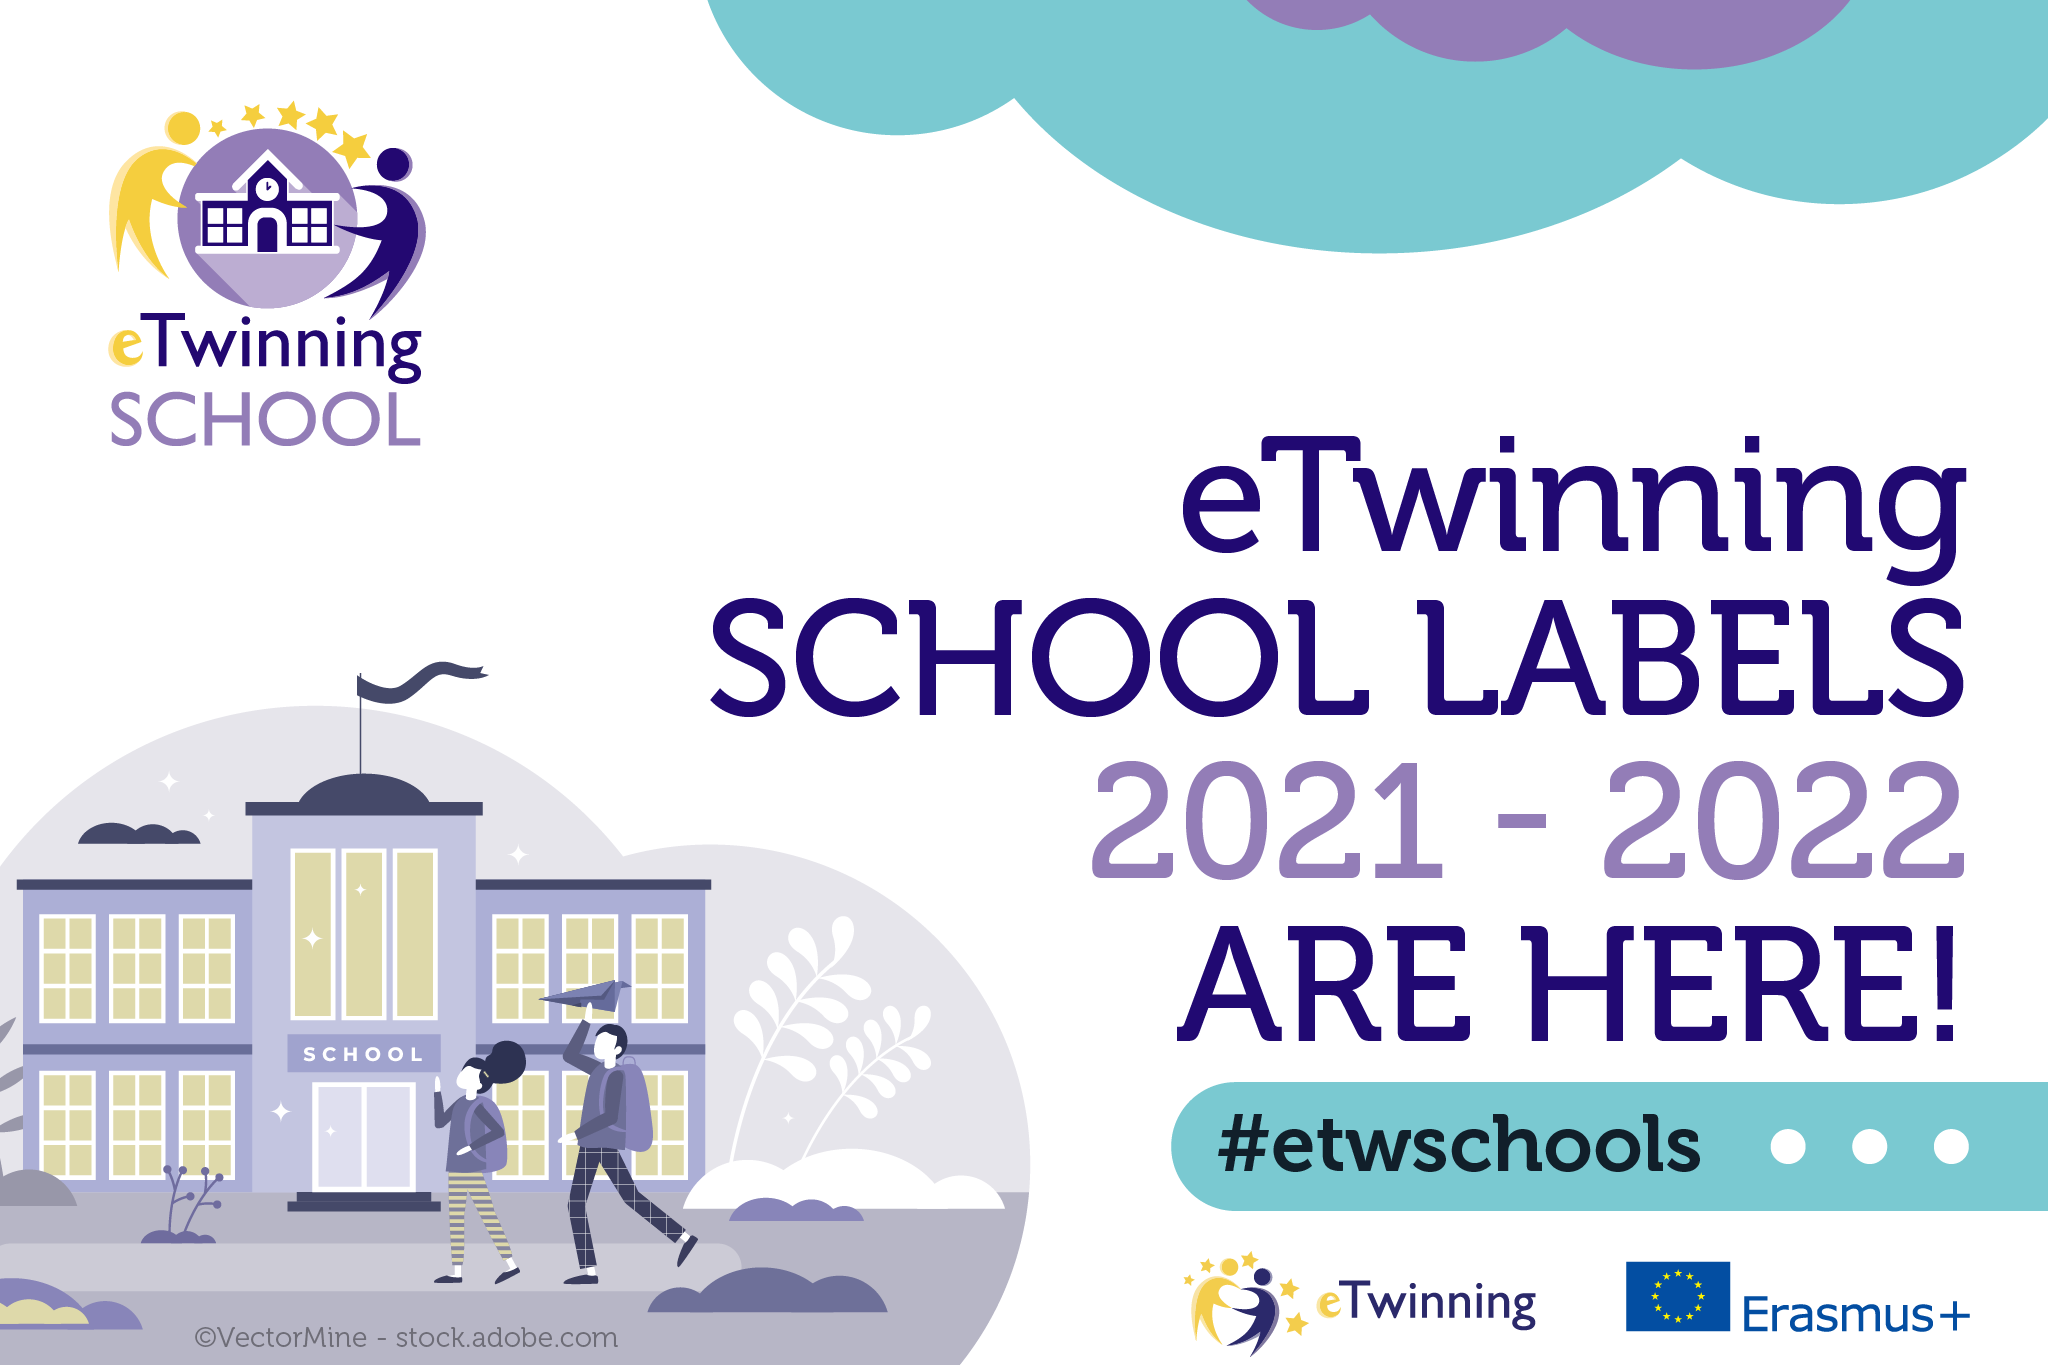 12 schools have been awarded the International eTwinning School Award.